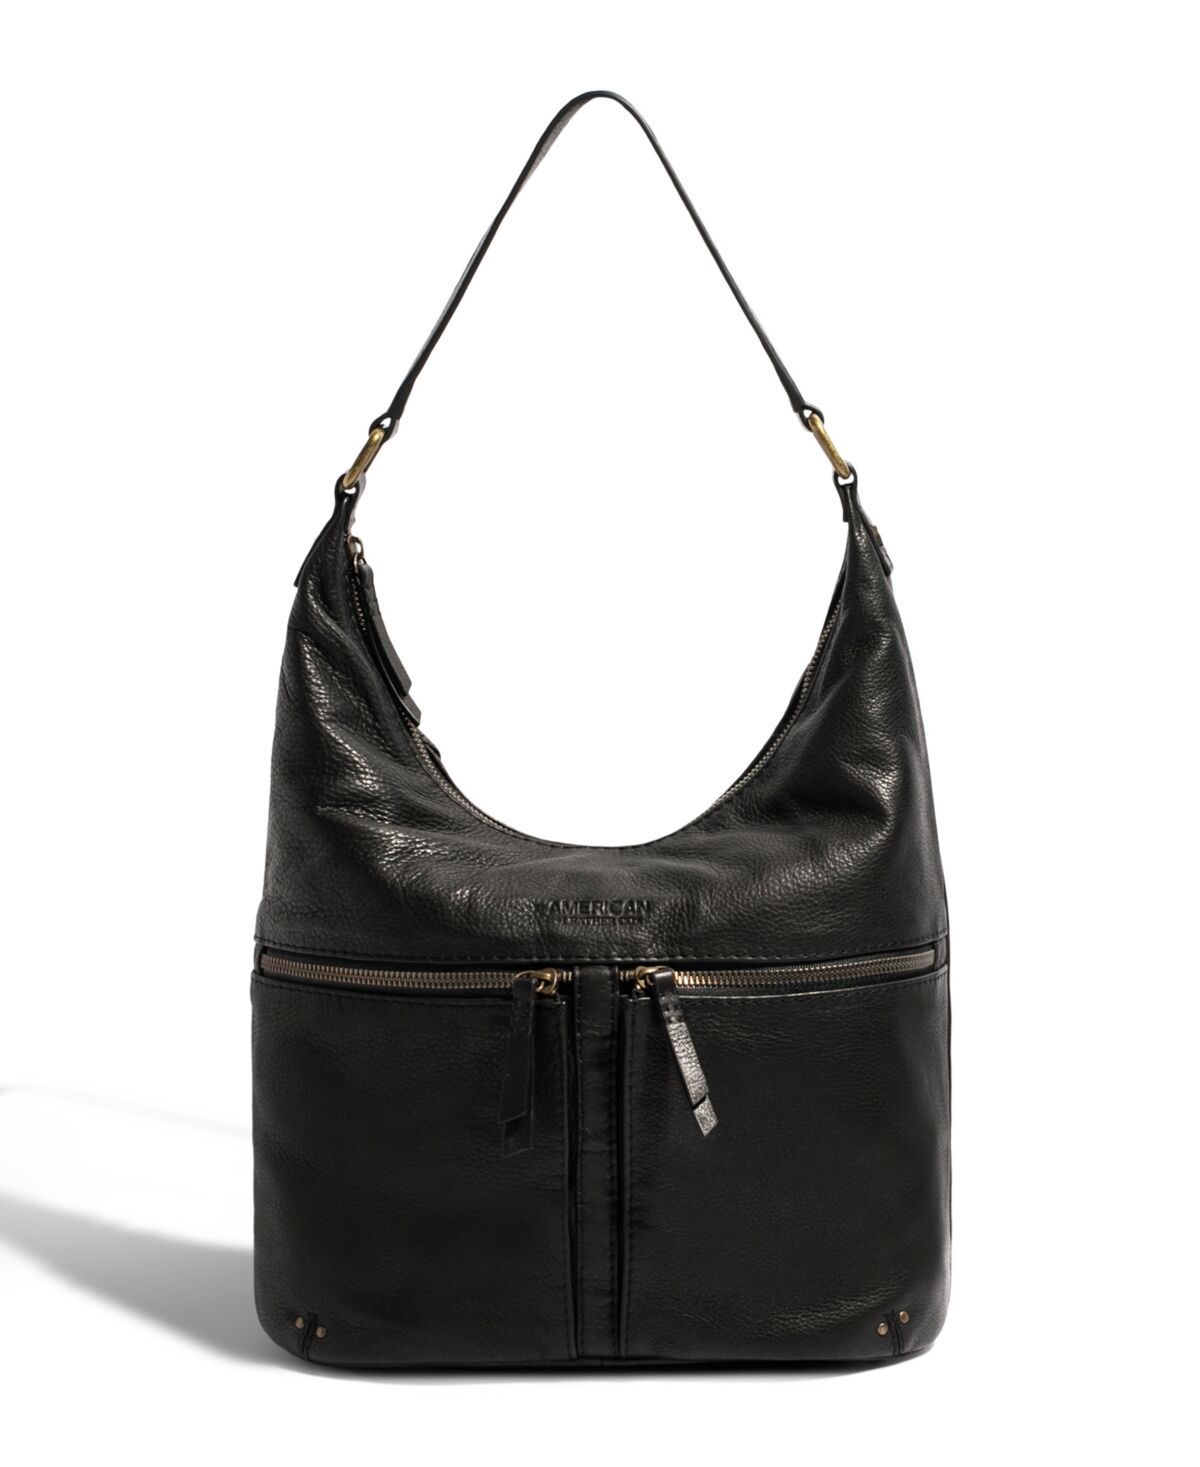 American Leather Co. Women's Hanover Hobo Bag - Black smooth